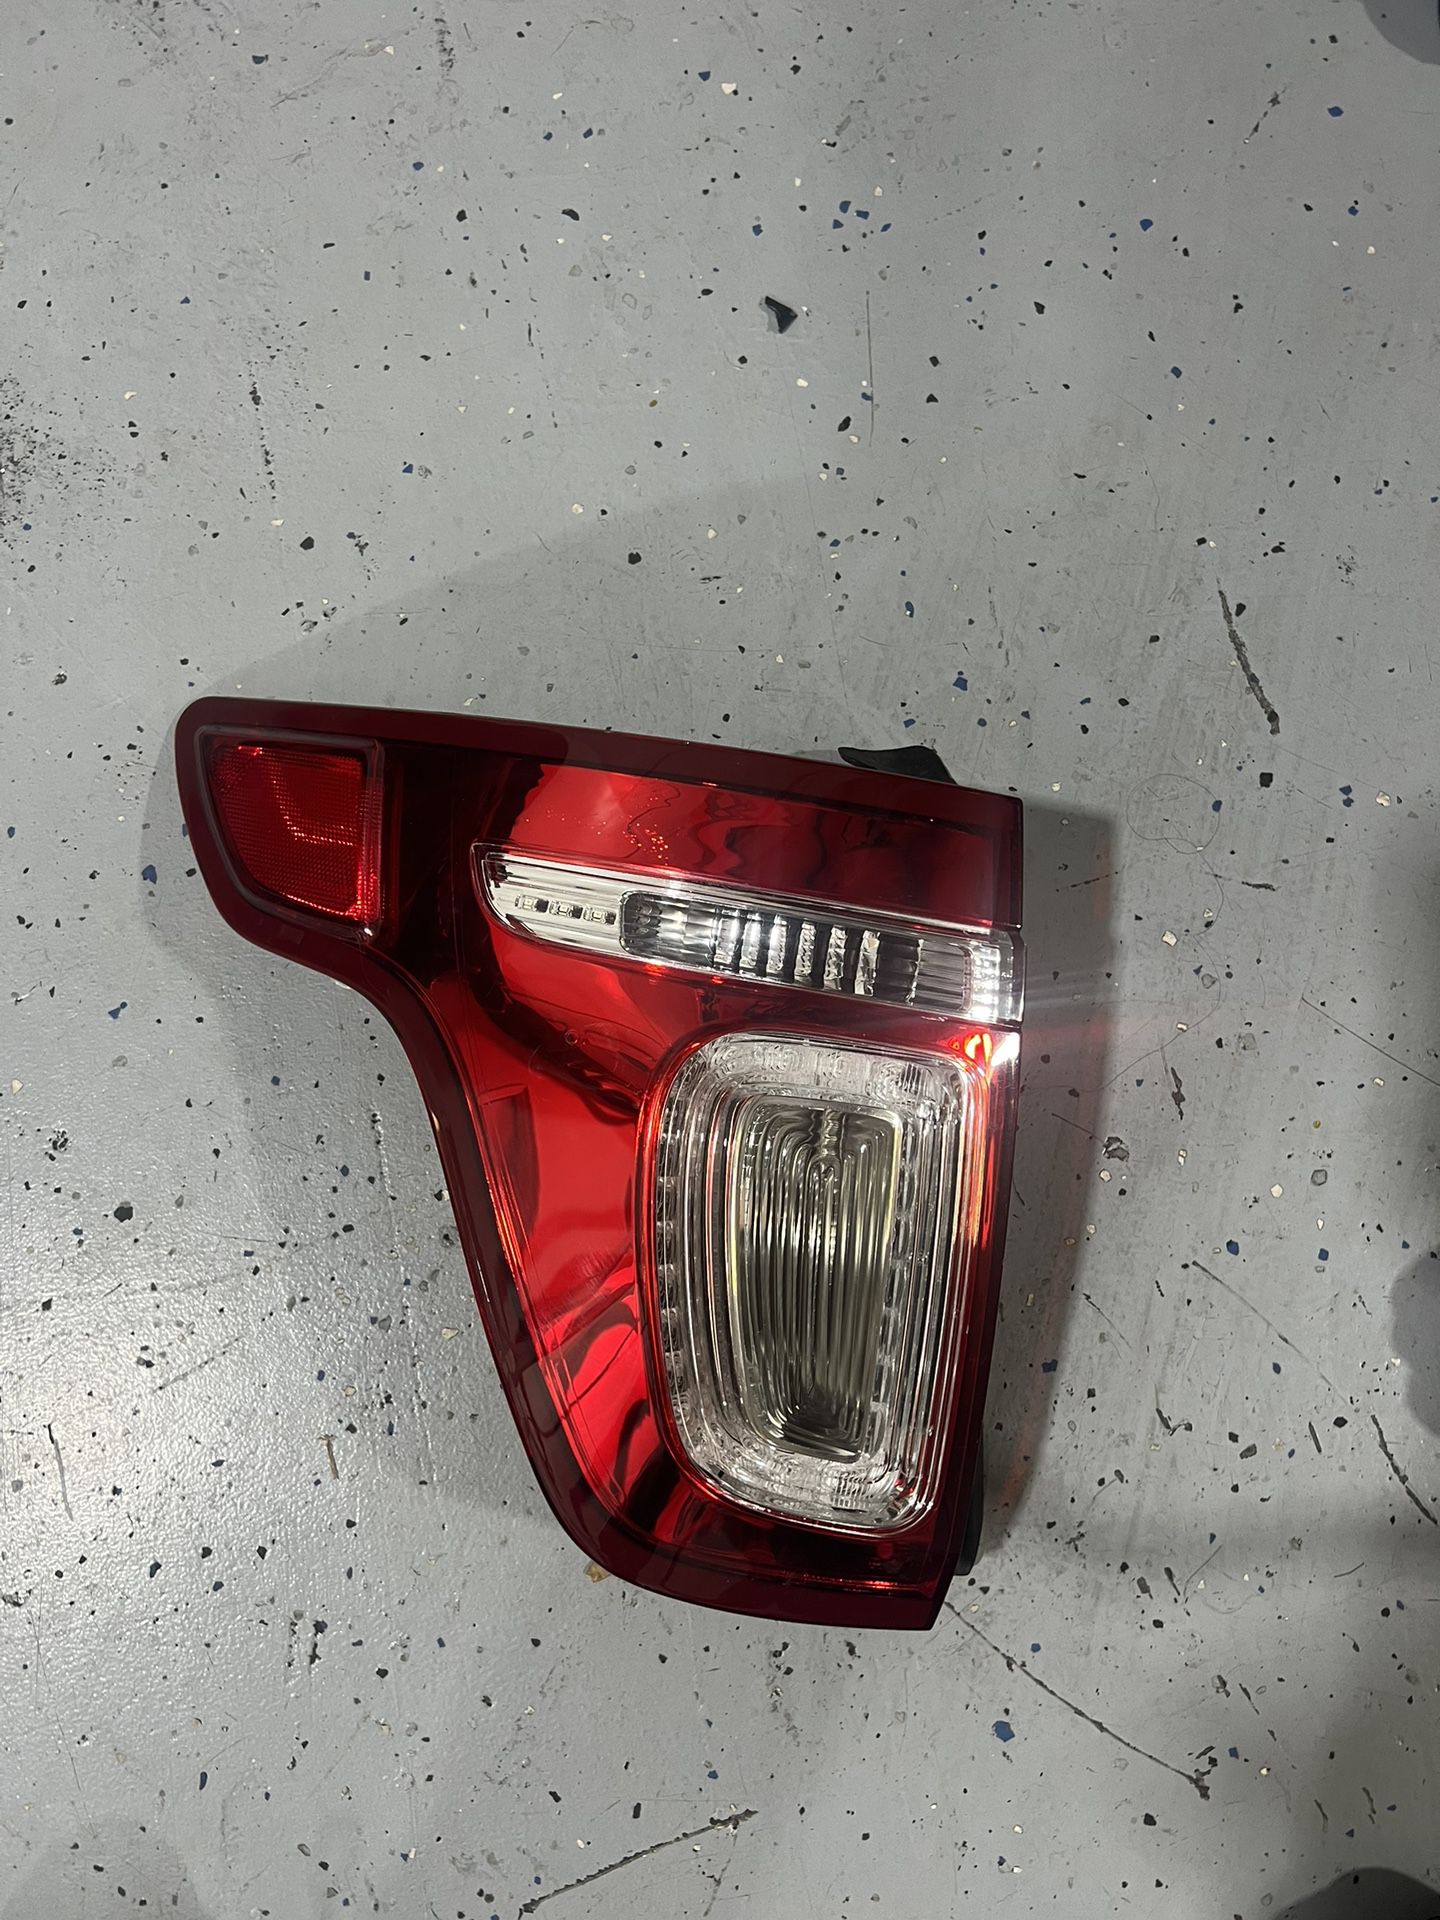 2011-2015 Ford Explorer Tail Light Lamp LED Left Driver OEM TESTED BB53-13B505-A